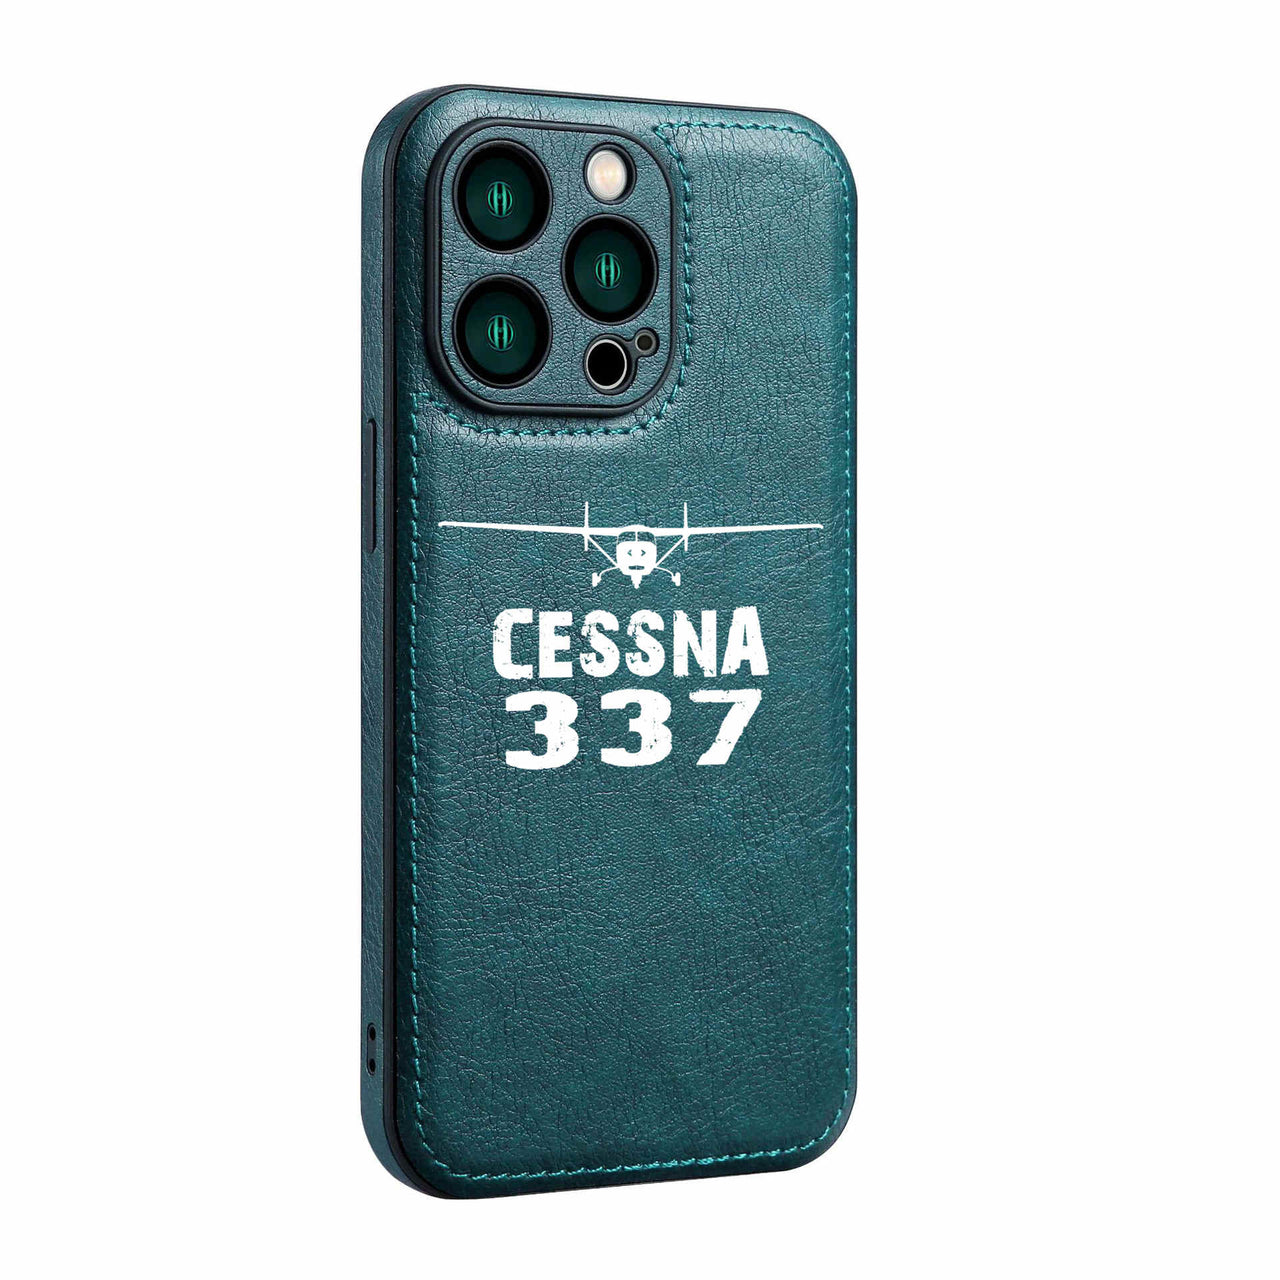 Cessna 337 & Plane Designed Leather iPhone Cases